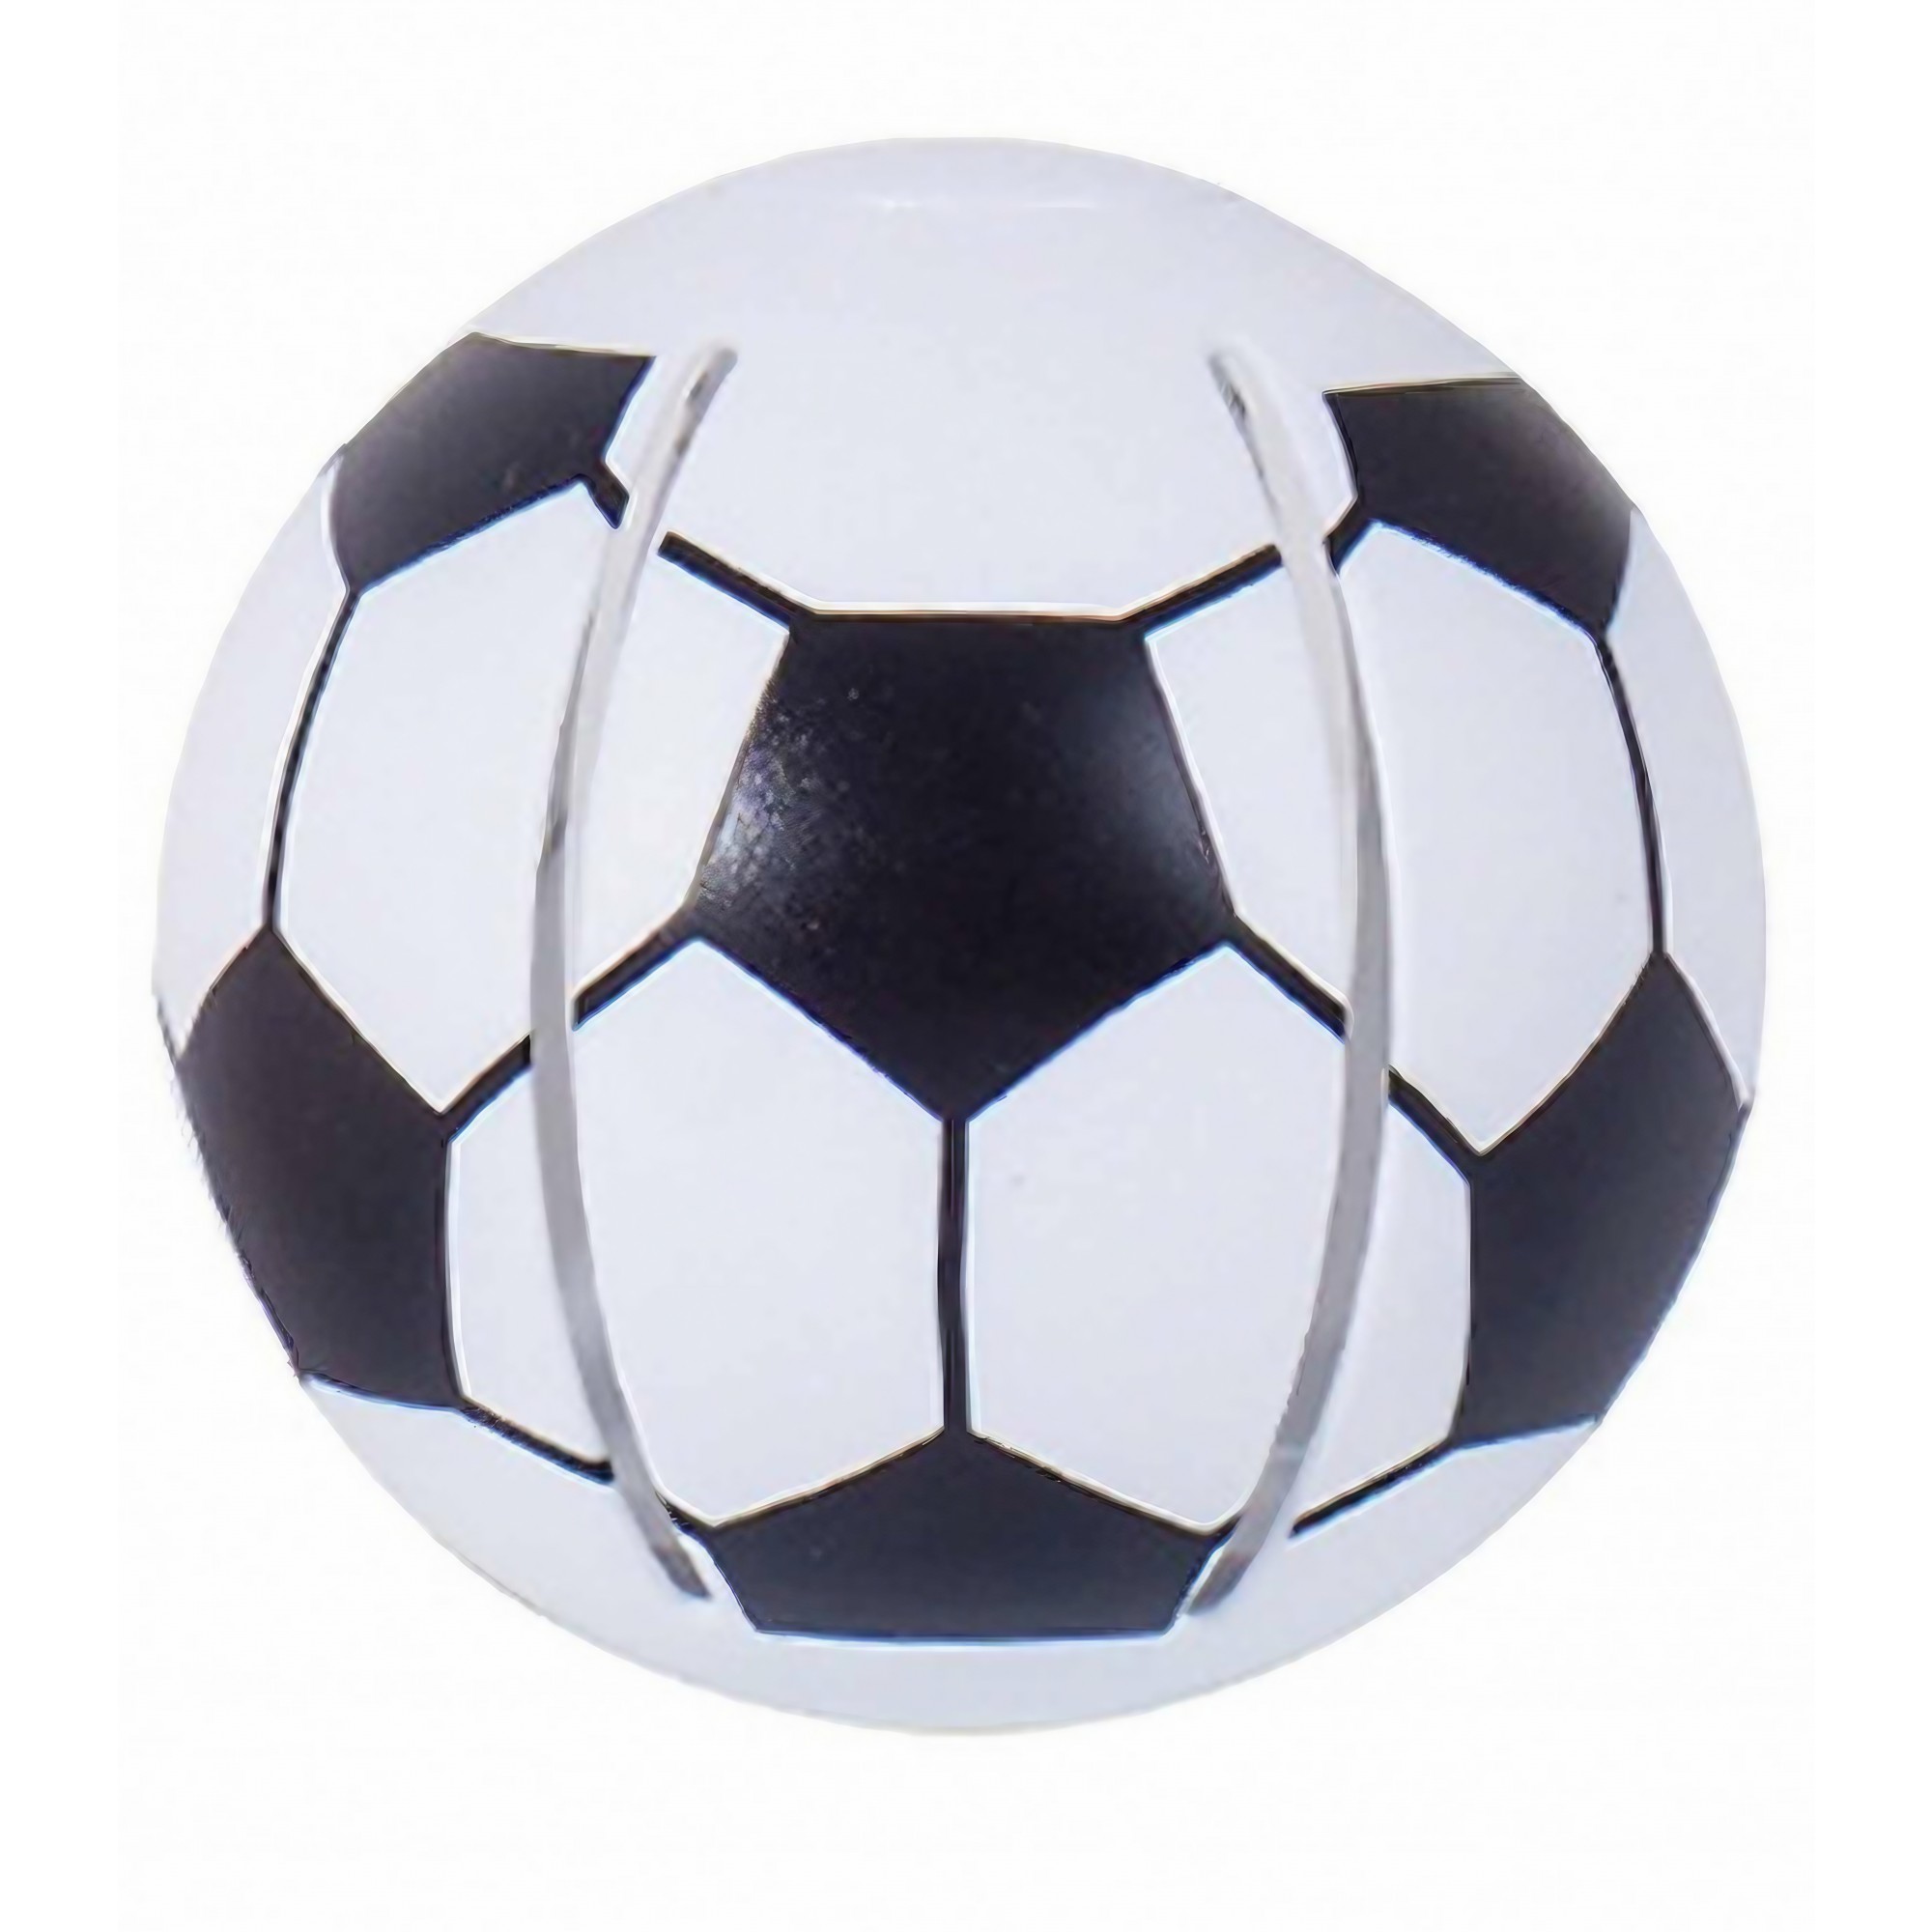 Minge UFO fotbal Flippy cu deformare, diametru 8 cm, 3 ani +, lumini LED interactiva, minge magica OZN zburator, minge zburatoare